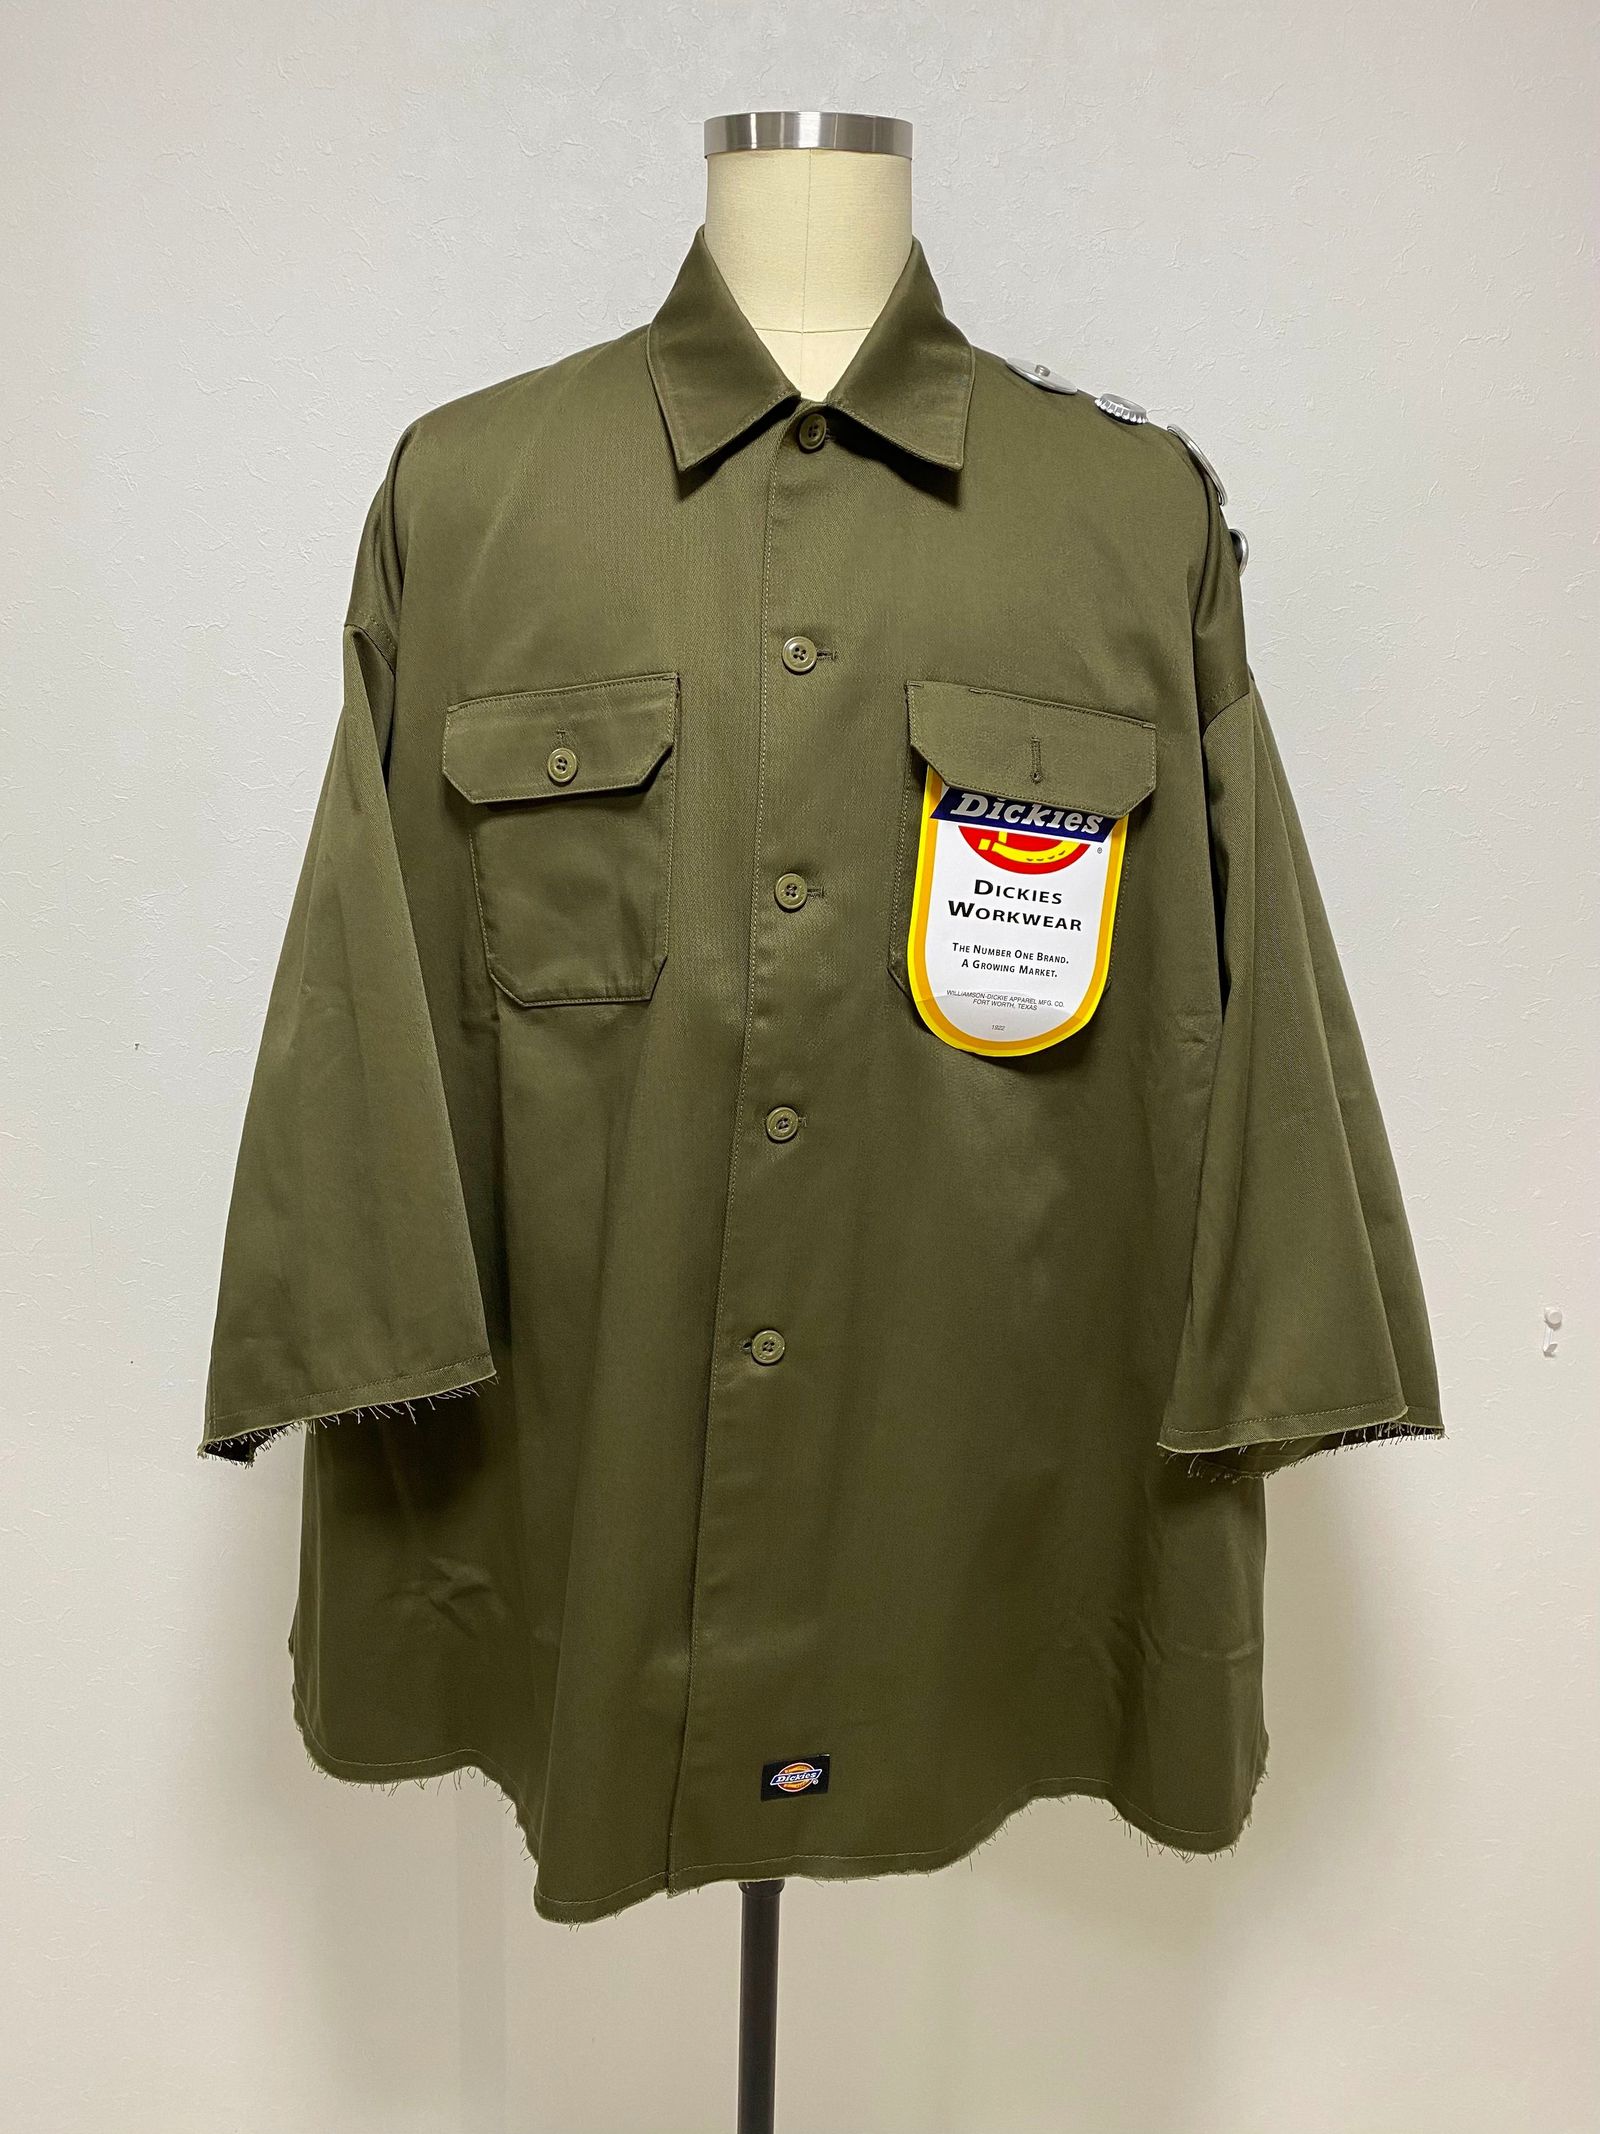 【22AW】DICKIESコラボレーション バックスマイルデザイン ミリタリーシャツ / Military Shirt / モスグリーン - FREE  - モス